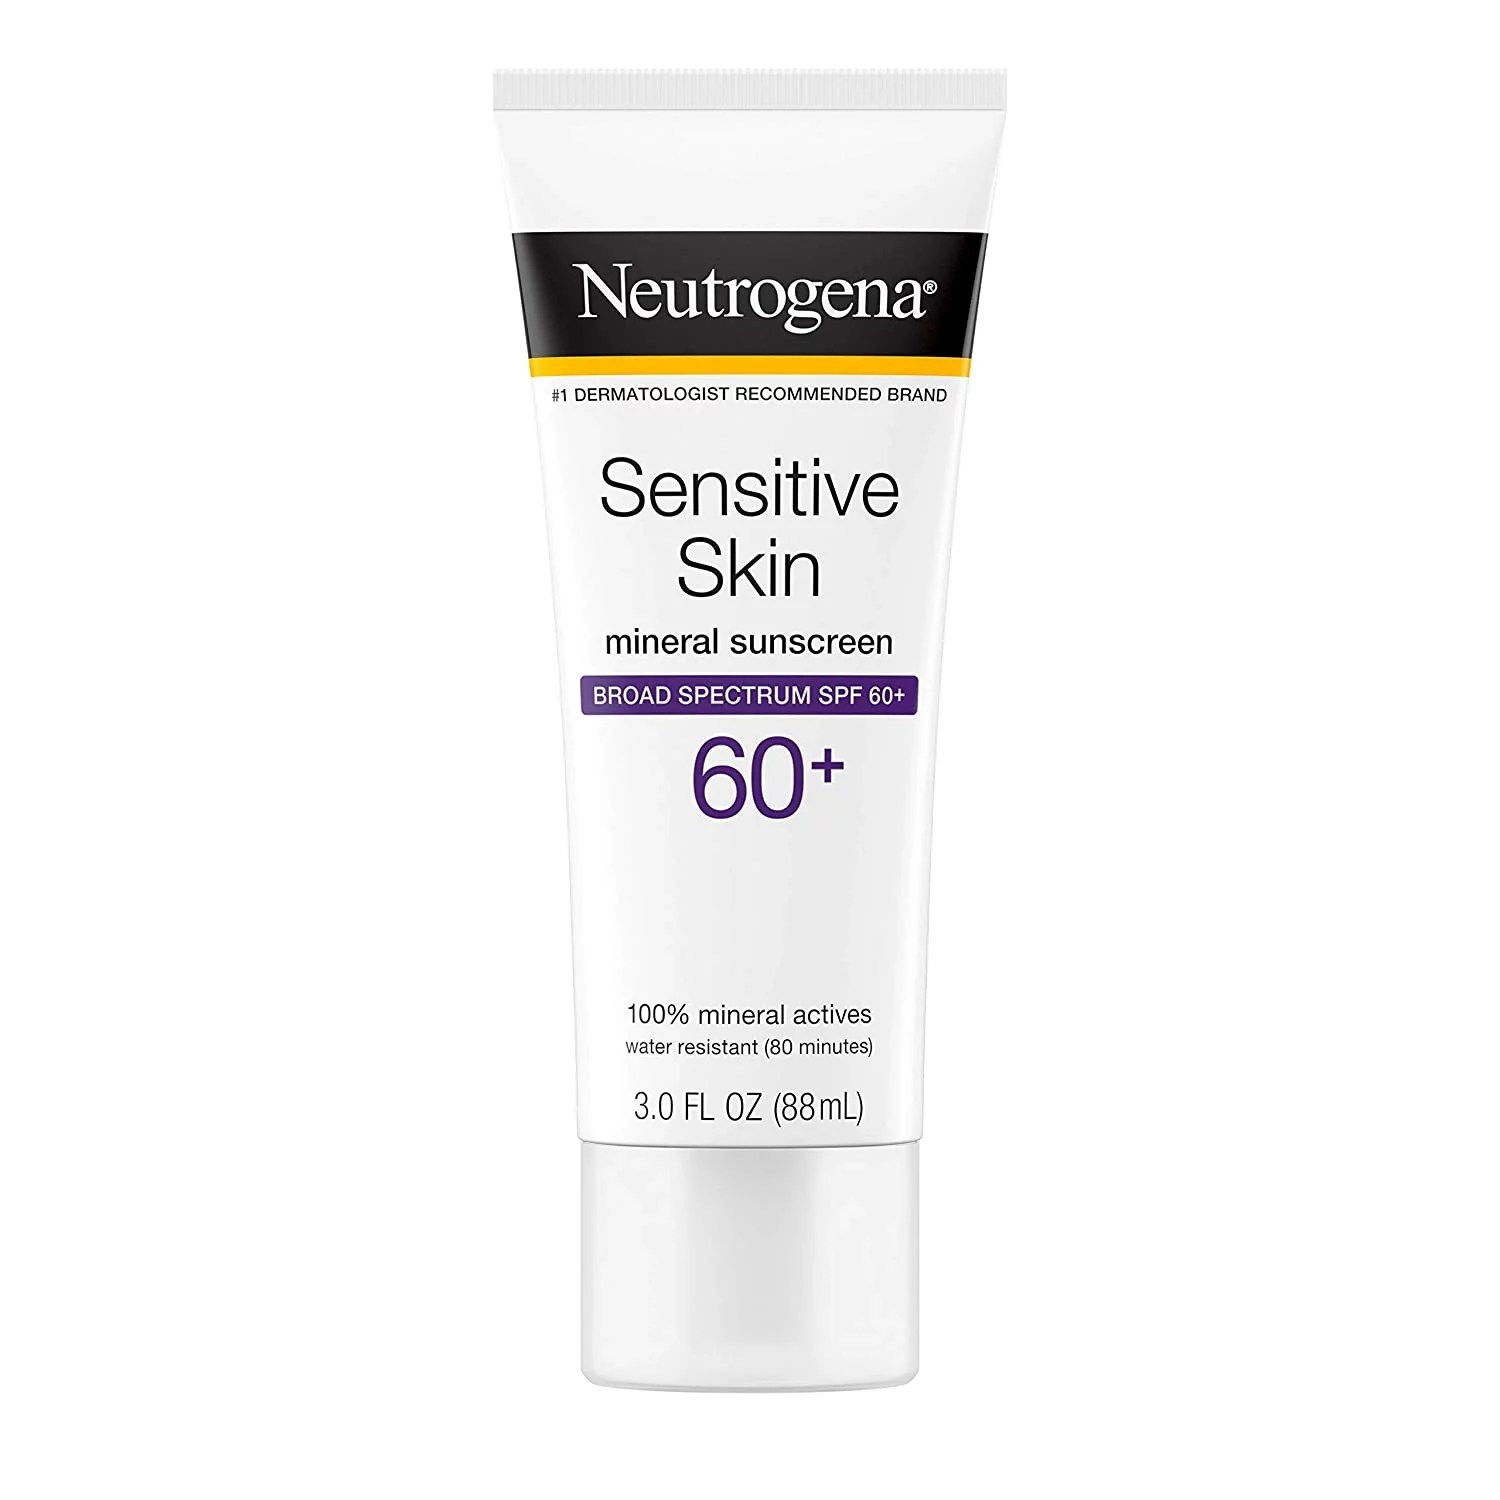 Neutrogena Sensitive Skin Sunscreen Broad Spectrum - SPF 60+, best sunscreens for sensitive skin